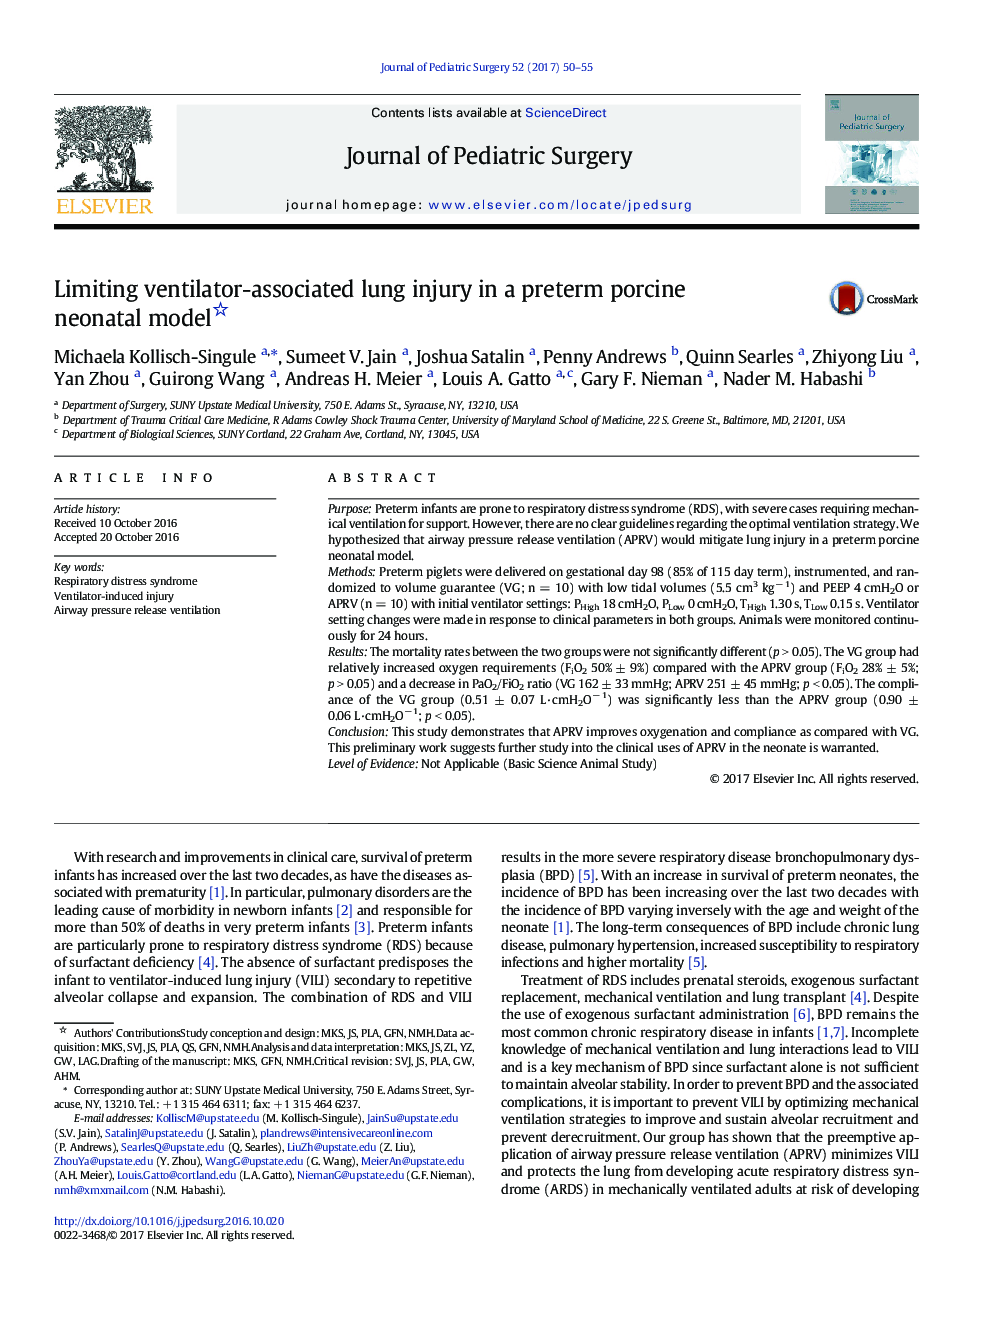 APSA PaperLimiting ventilator-associated lung injury in a preterm porcine neonatal model